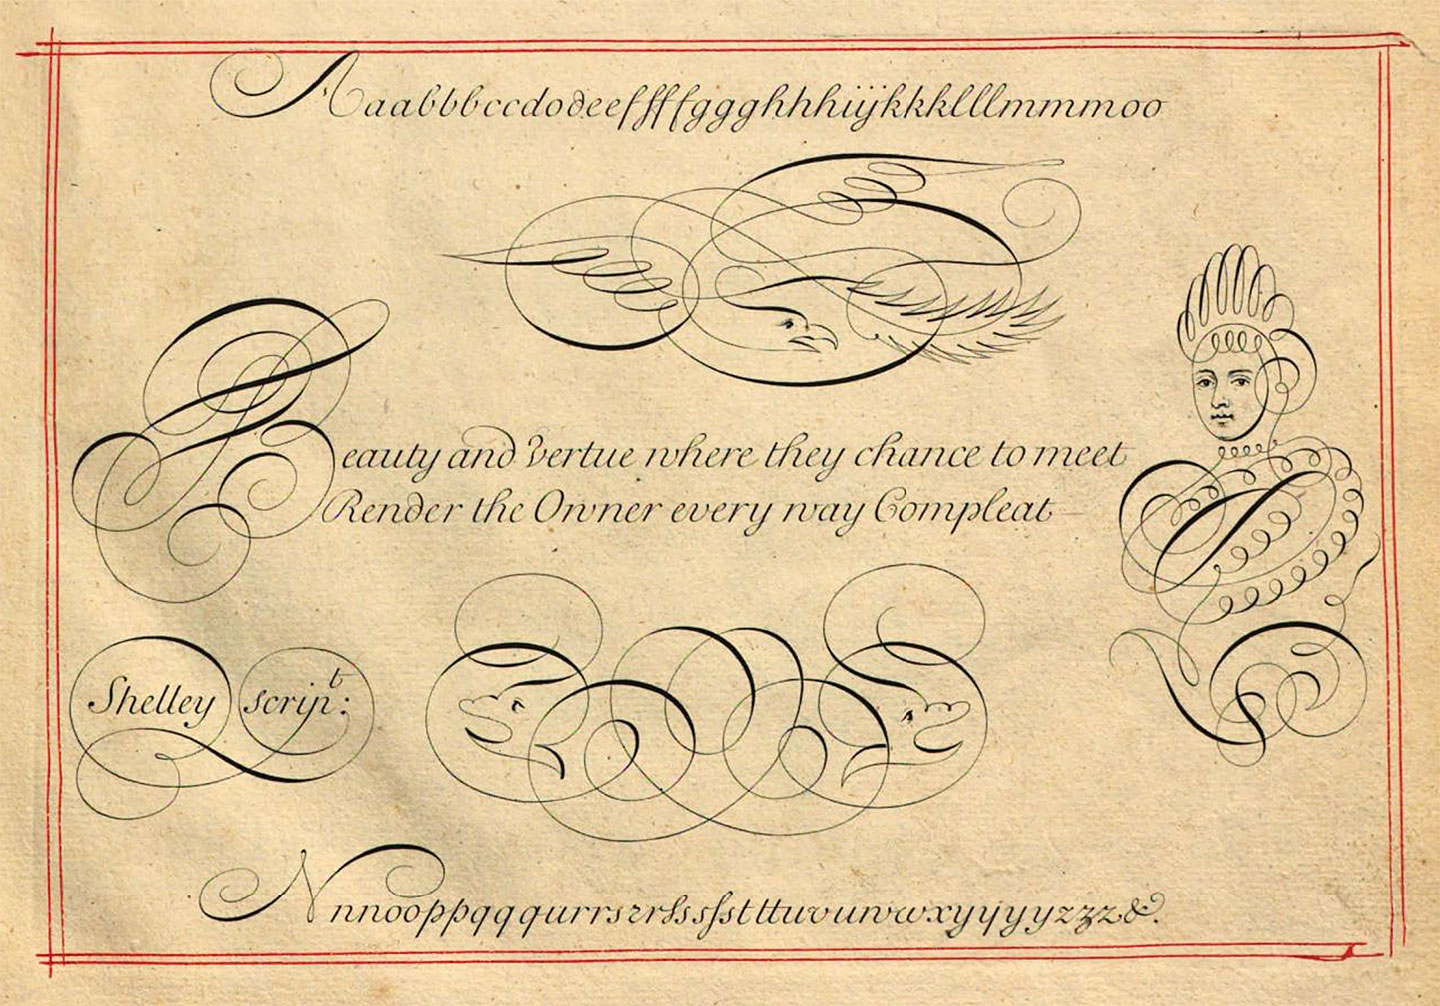 Pen-stroke portraits from a penmanship manual, London, 1705